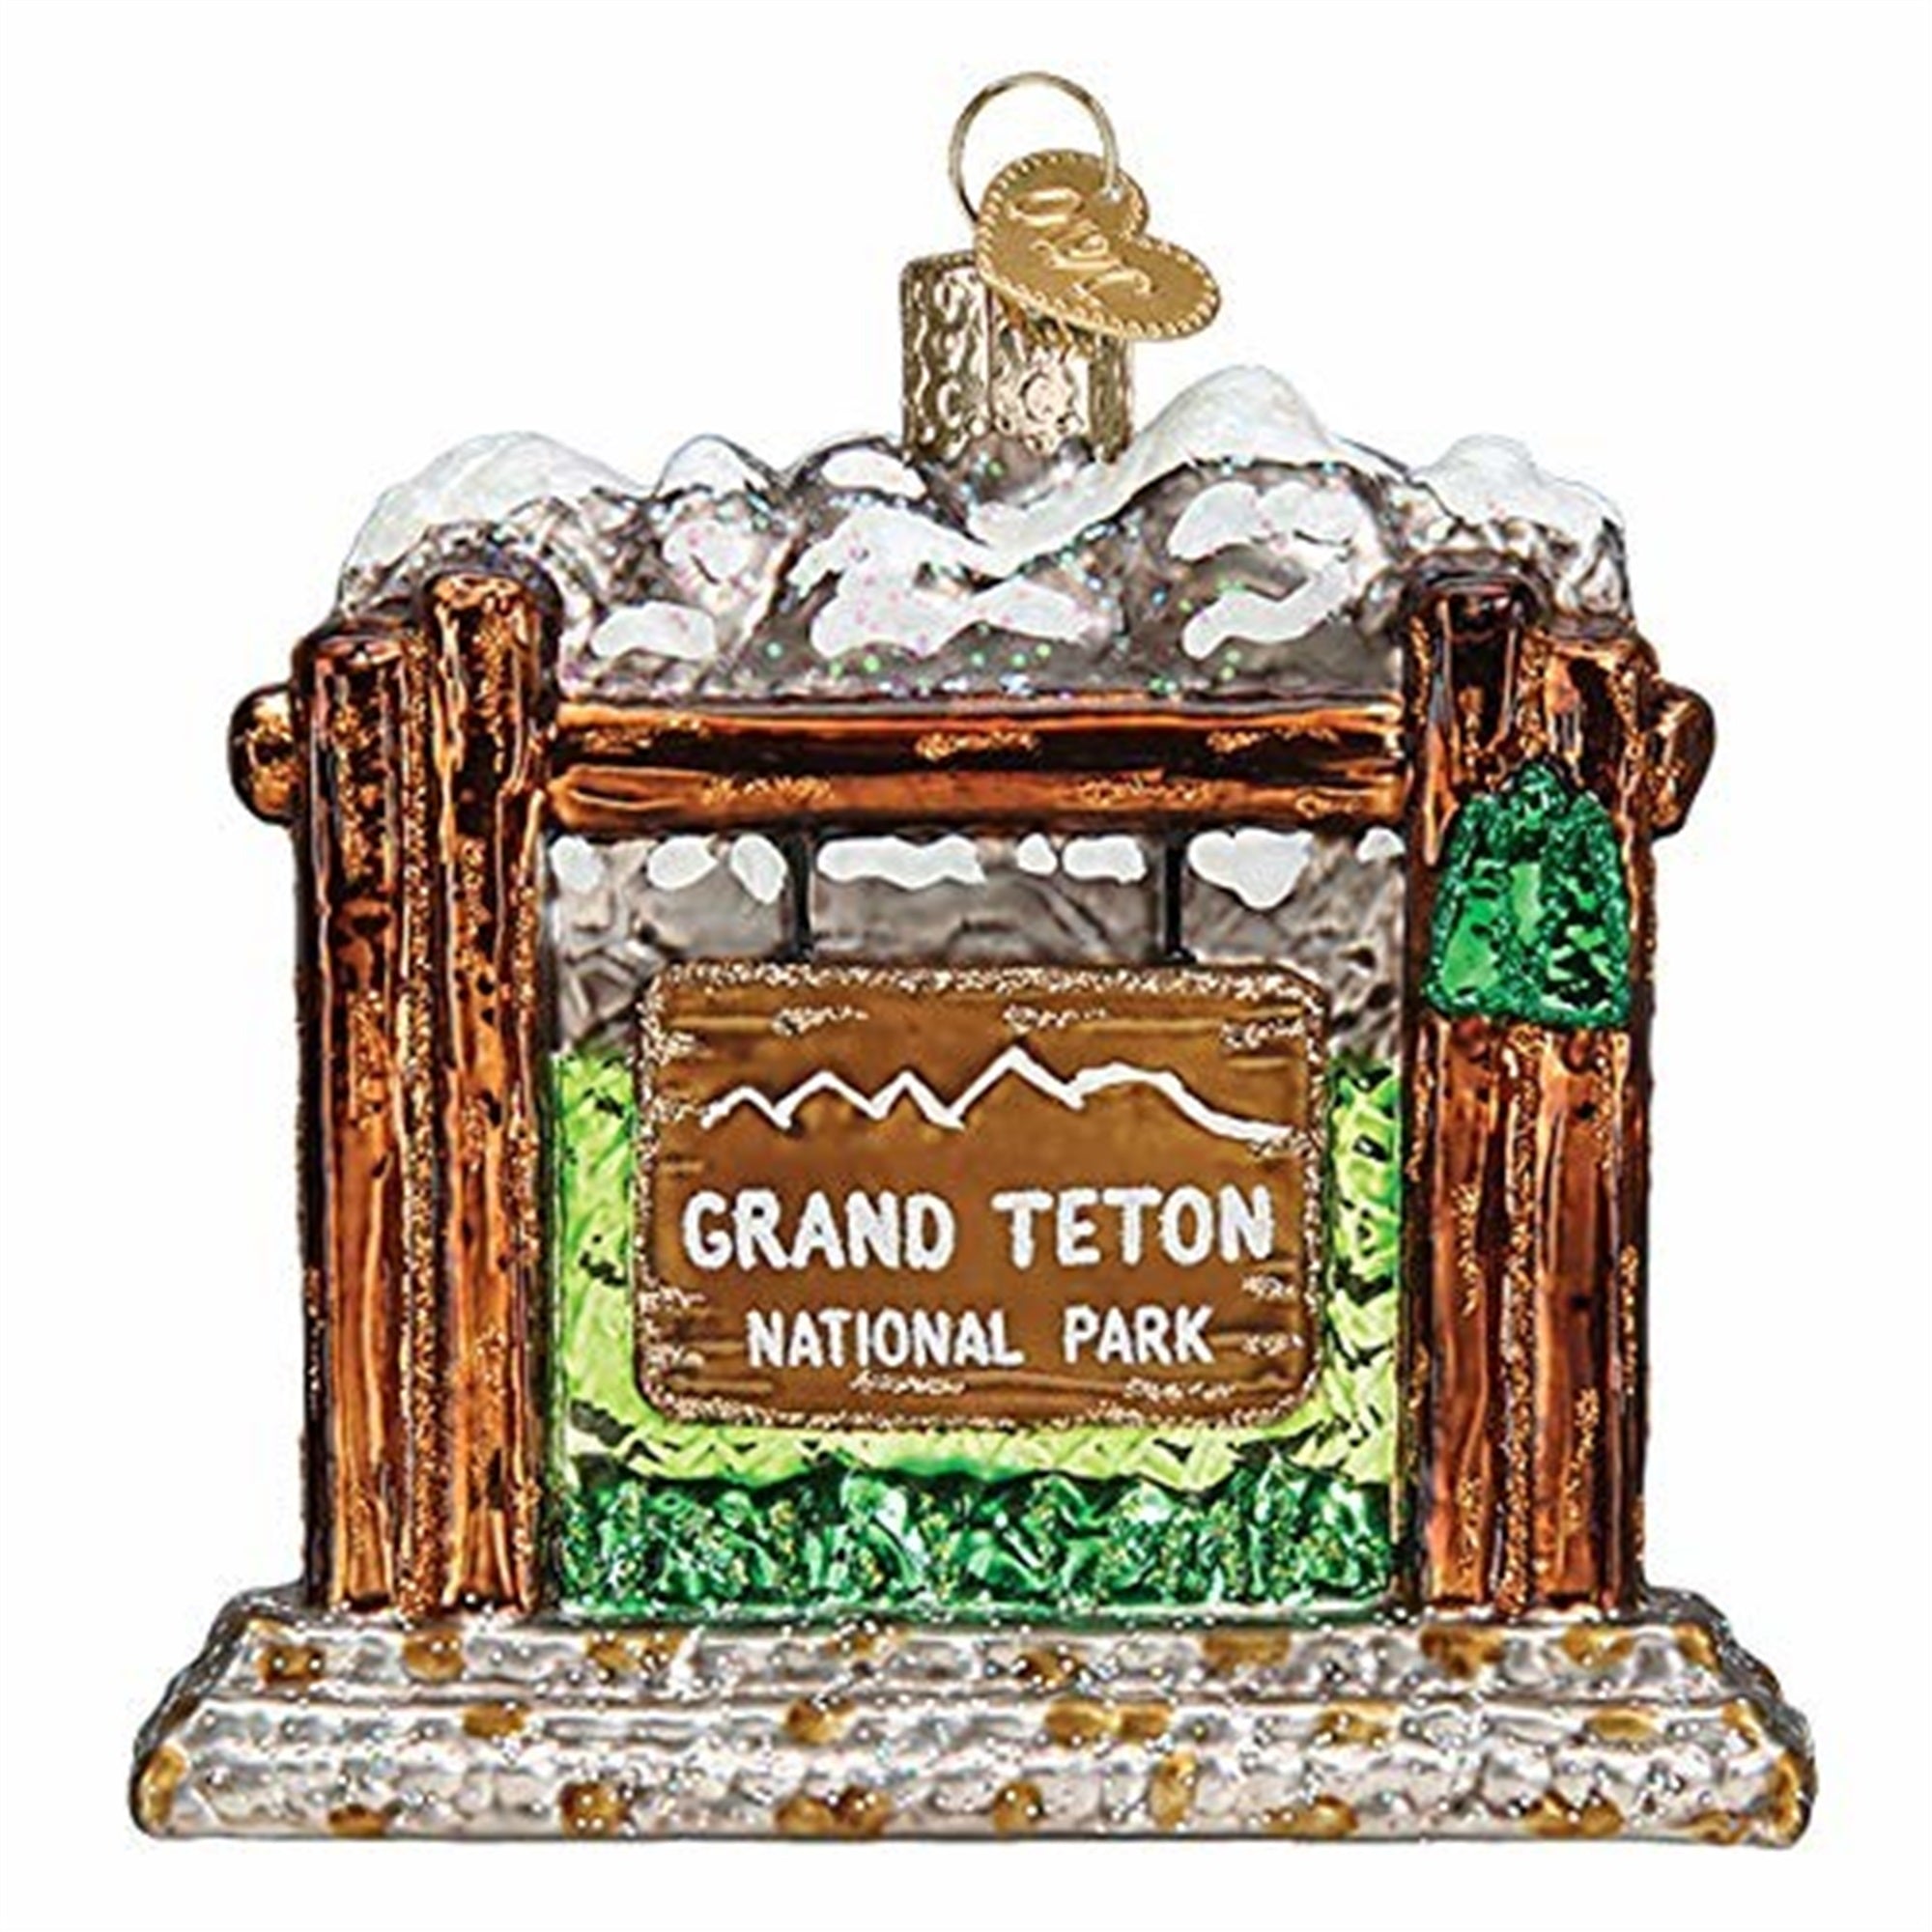 Old World Christmas Glass Blown Grand Teton National Park Ornament